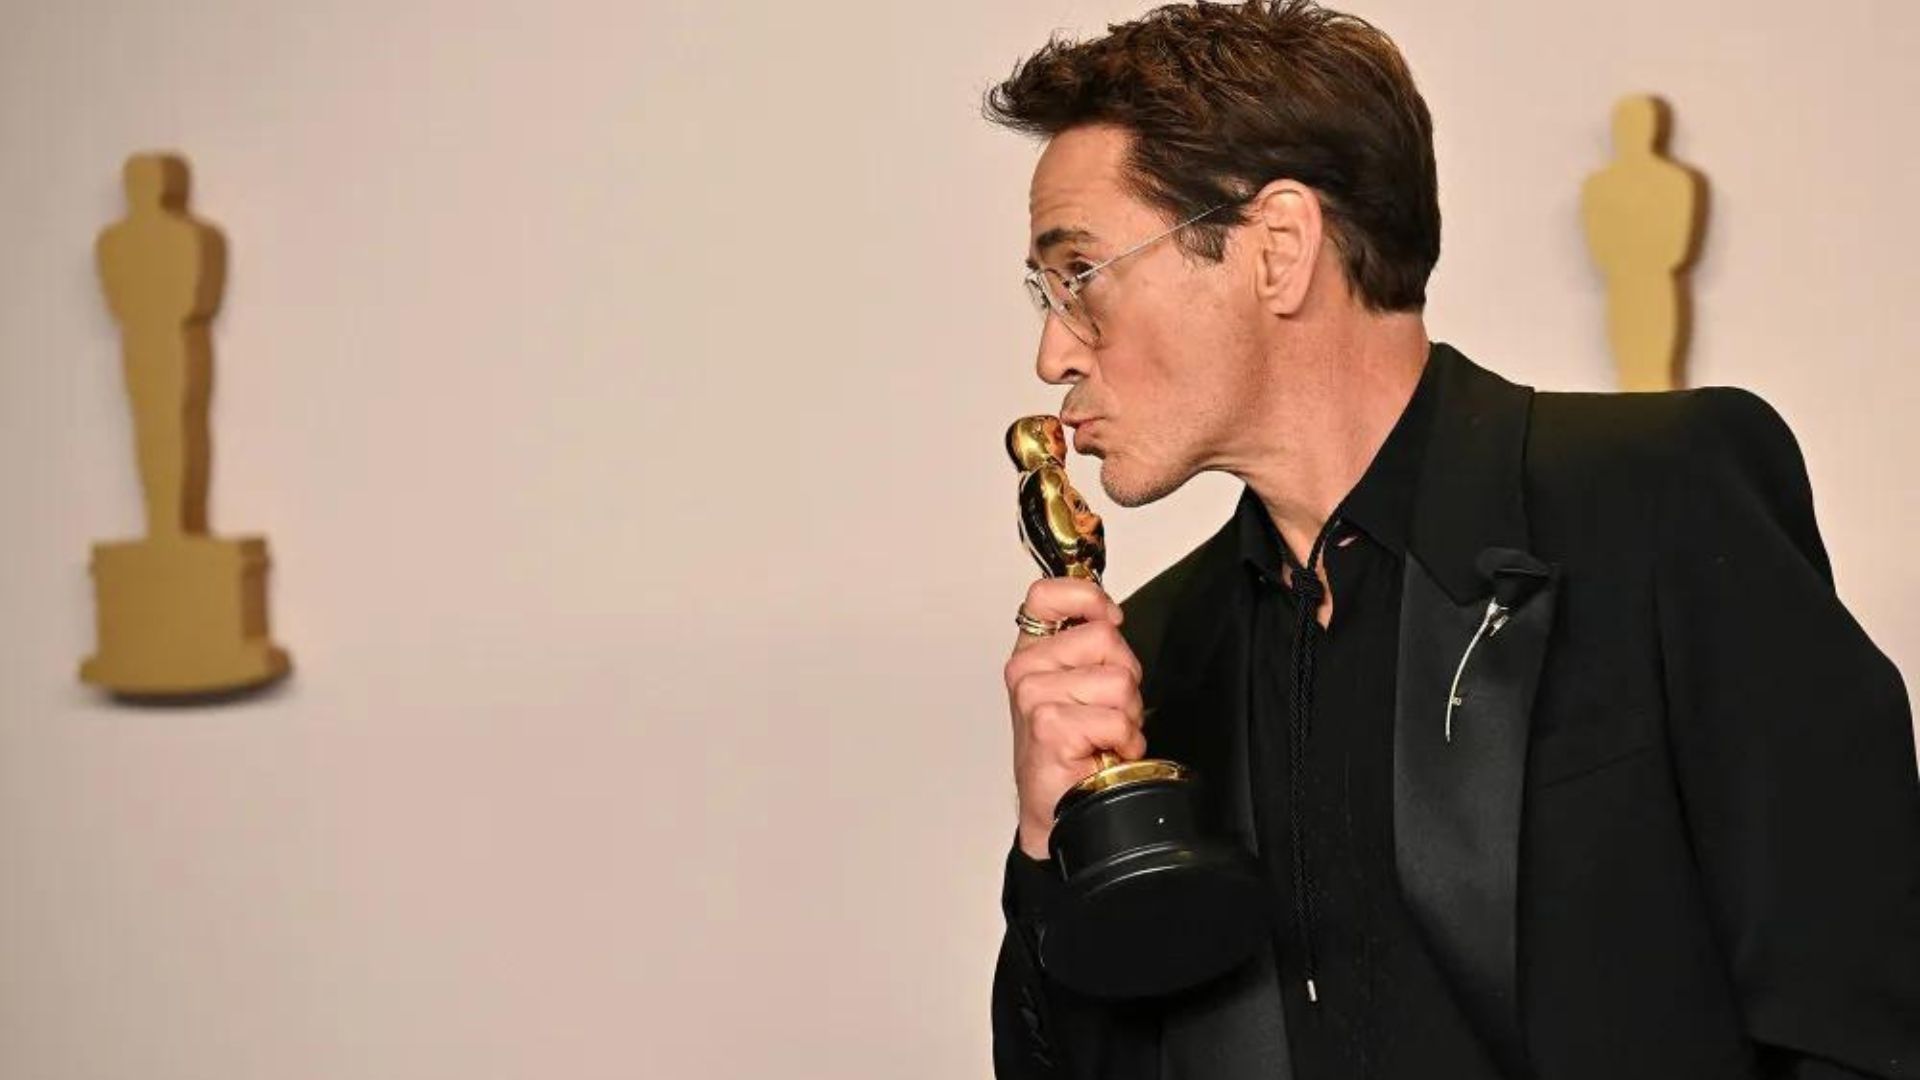 Robert Downey Jr. Secures Oscar for Best Supporting Actor For ‘Oppenheimer’